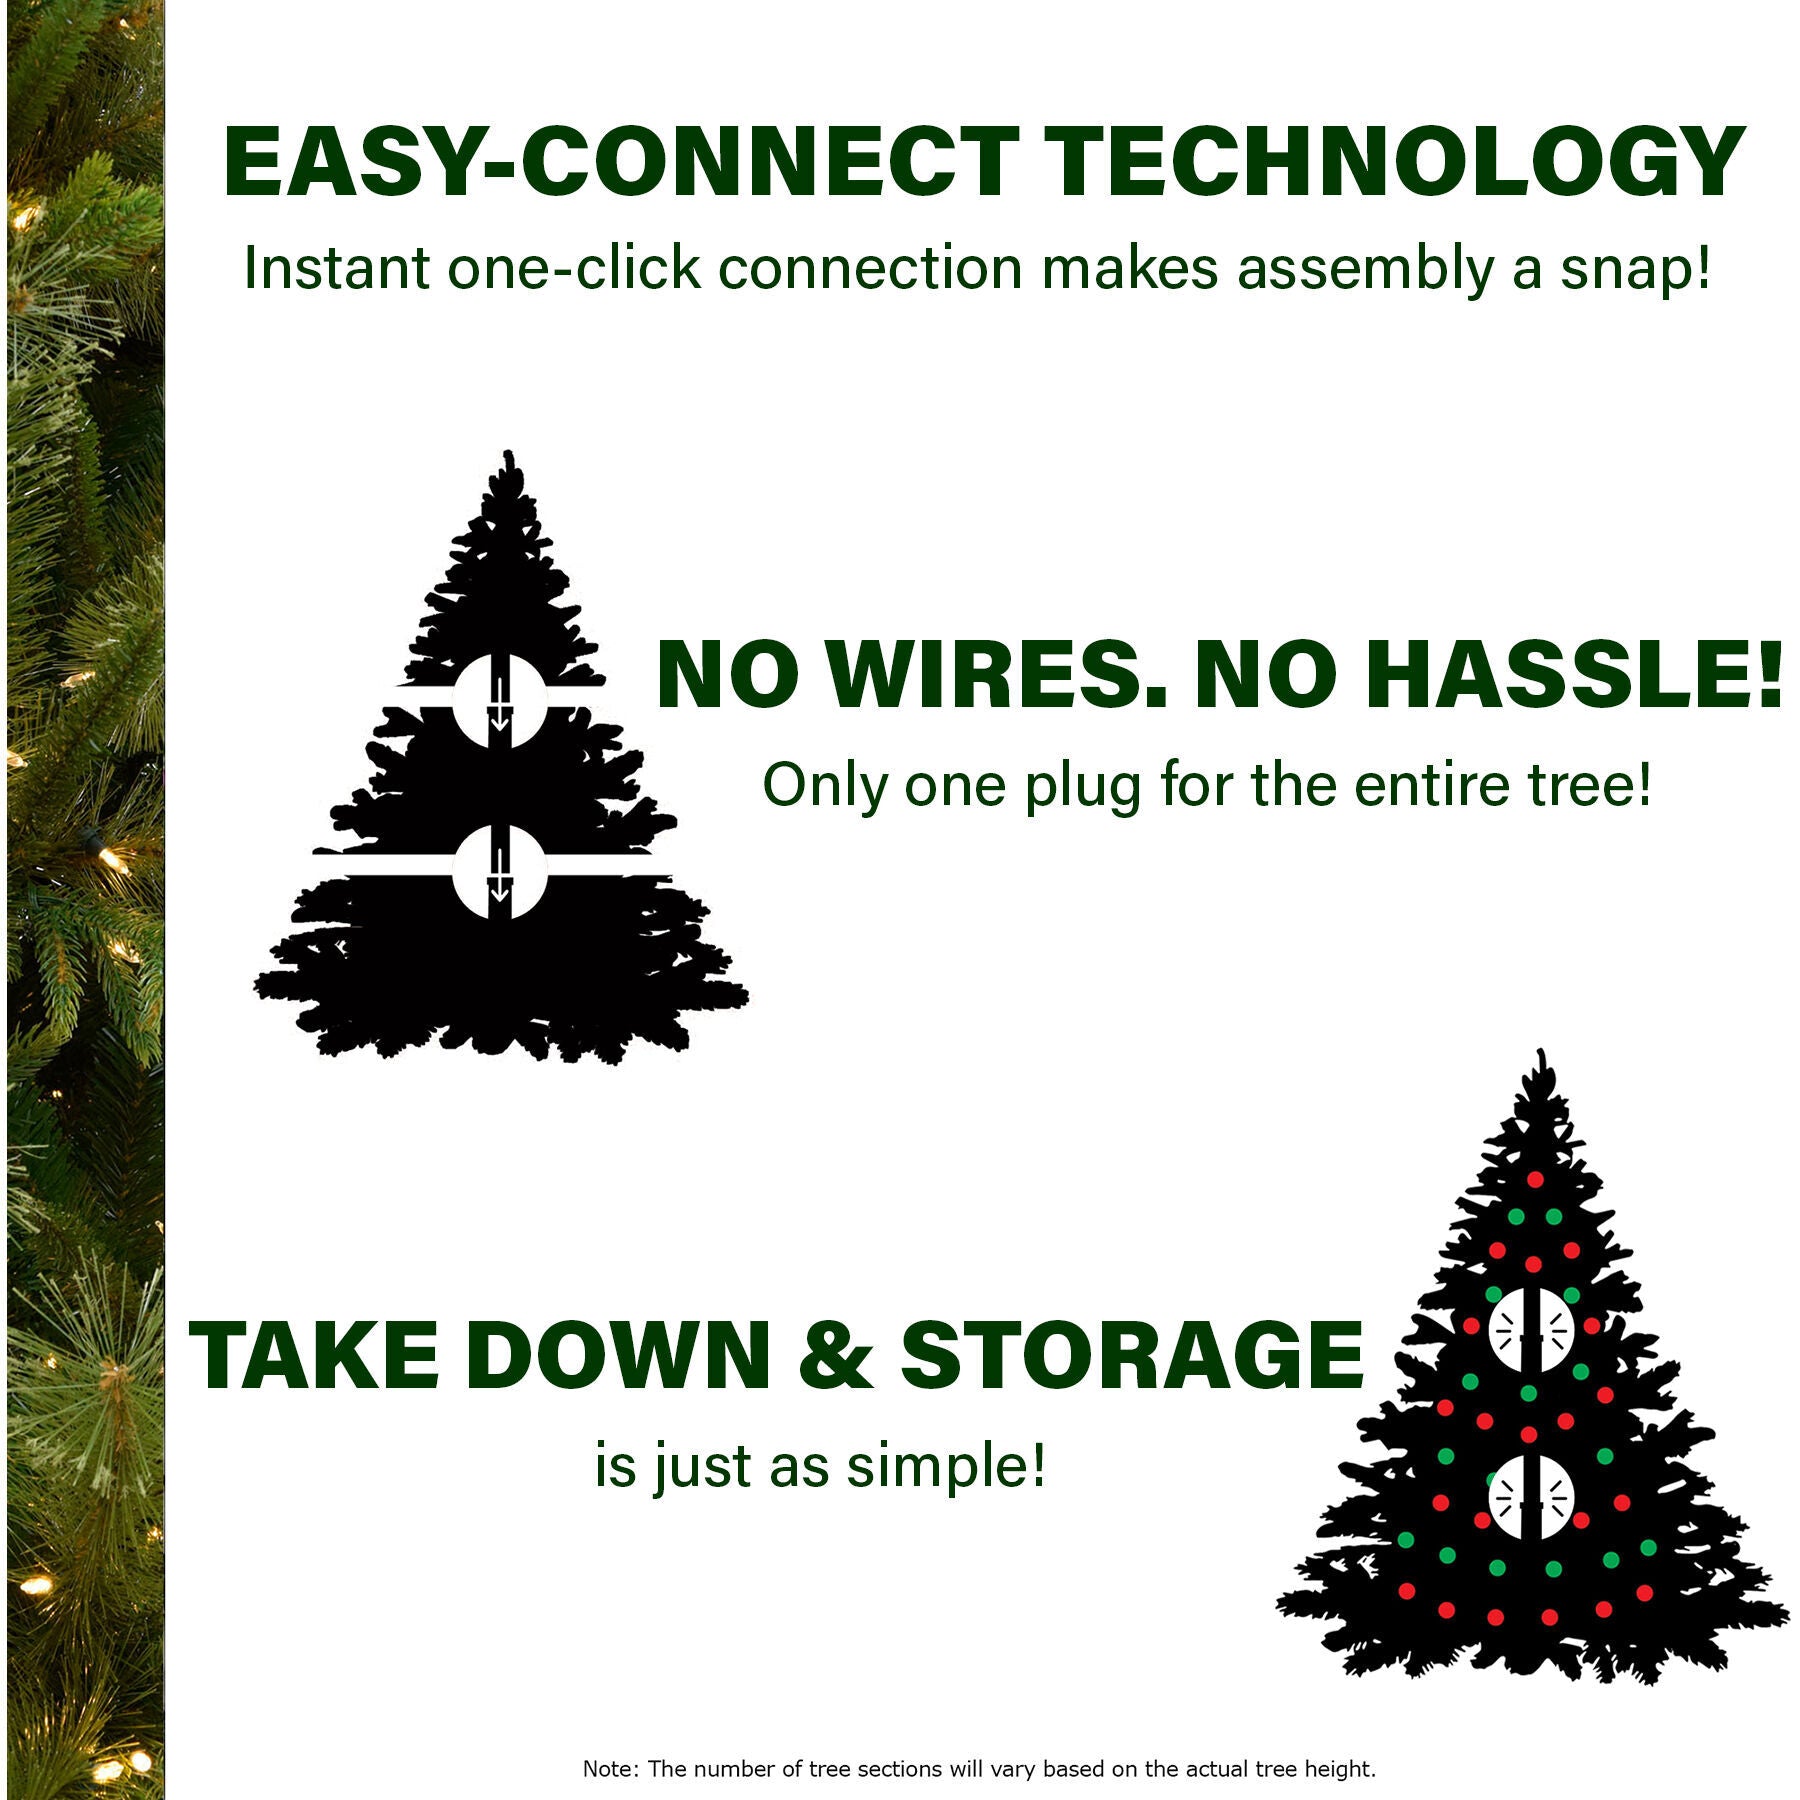 Fraser Hill Farm -  6.5 Ft. Carmel Pine Slim Artificial Christmas Tree with Multi-Color LED String Lighting